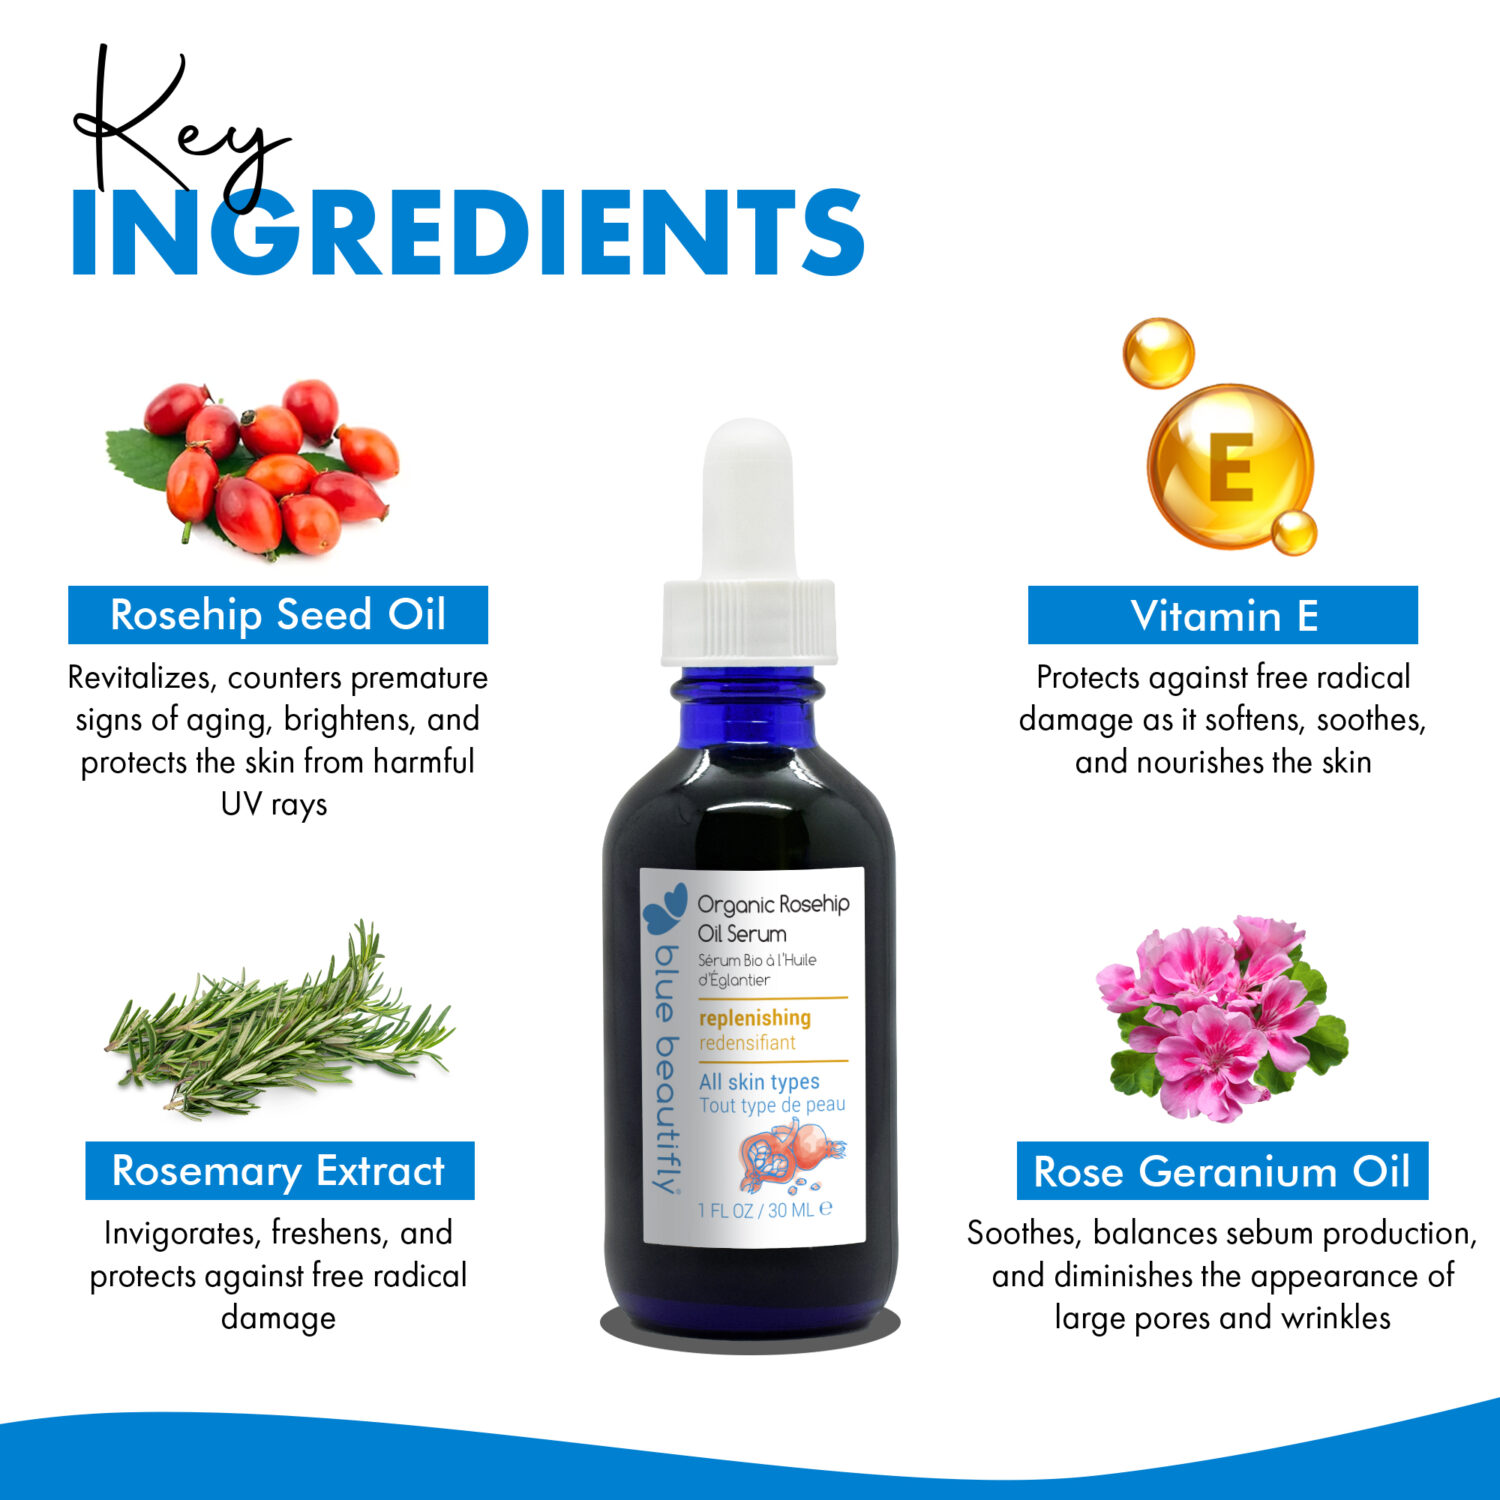 Blue Beautifly Organic Rosehip Oil Serum key ingredients are rosehip fruit seed oil, rose geranium oil, rosemary oil, and vitamin E